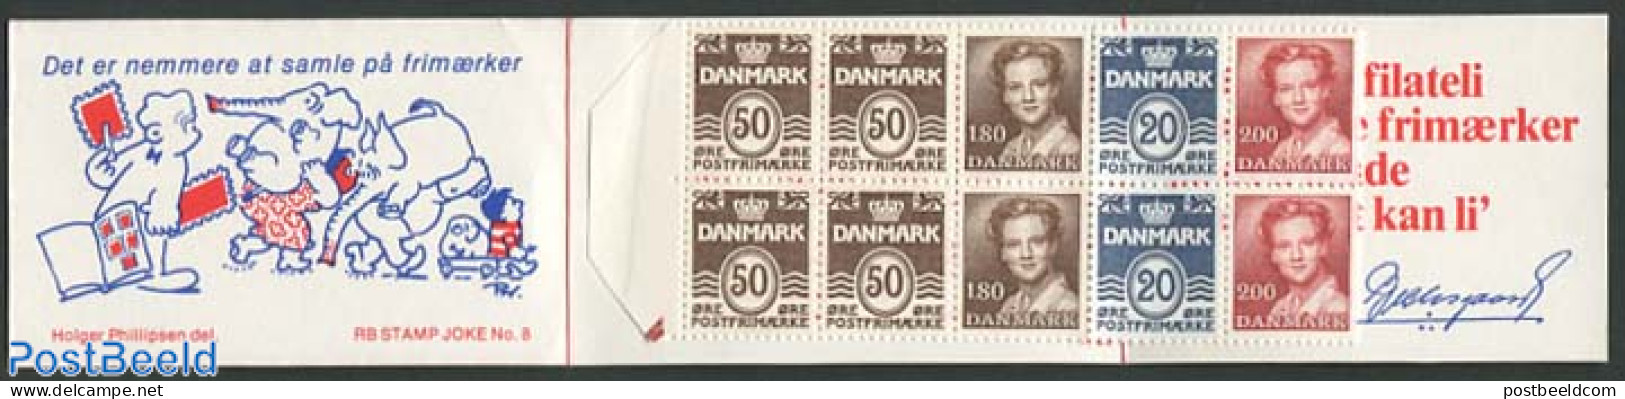 Denmark 1982 Definitives Booklet (H23 On Cover), Mint NH, Stamp Booklets - Unused Stamps